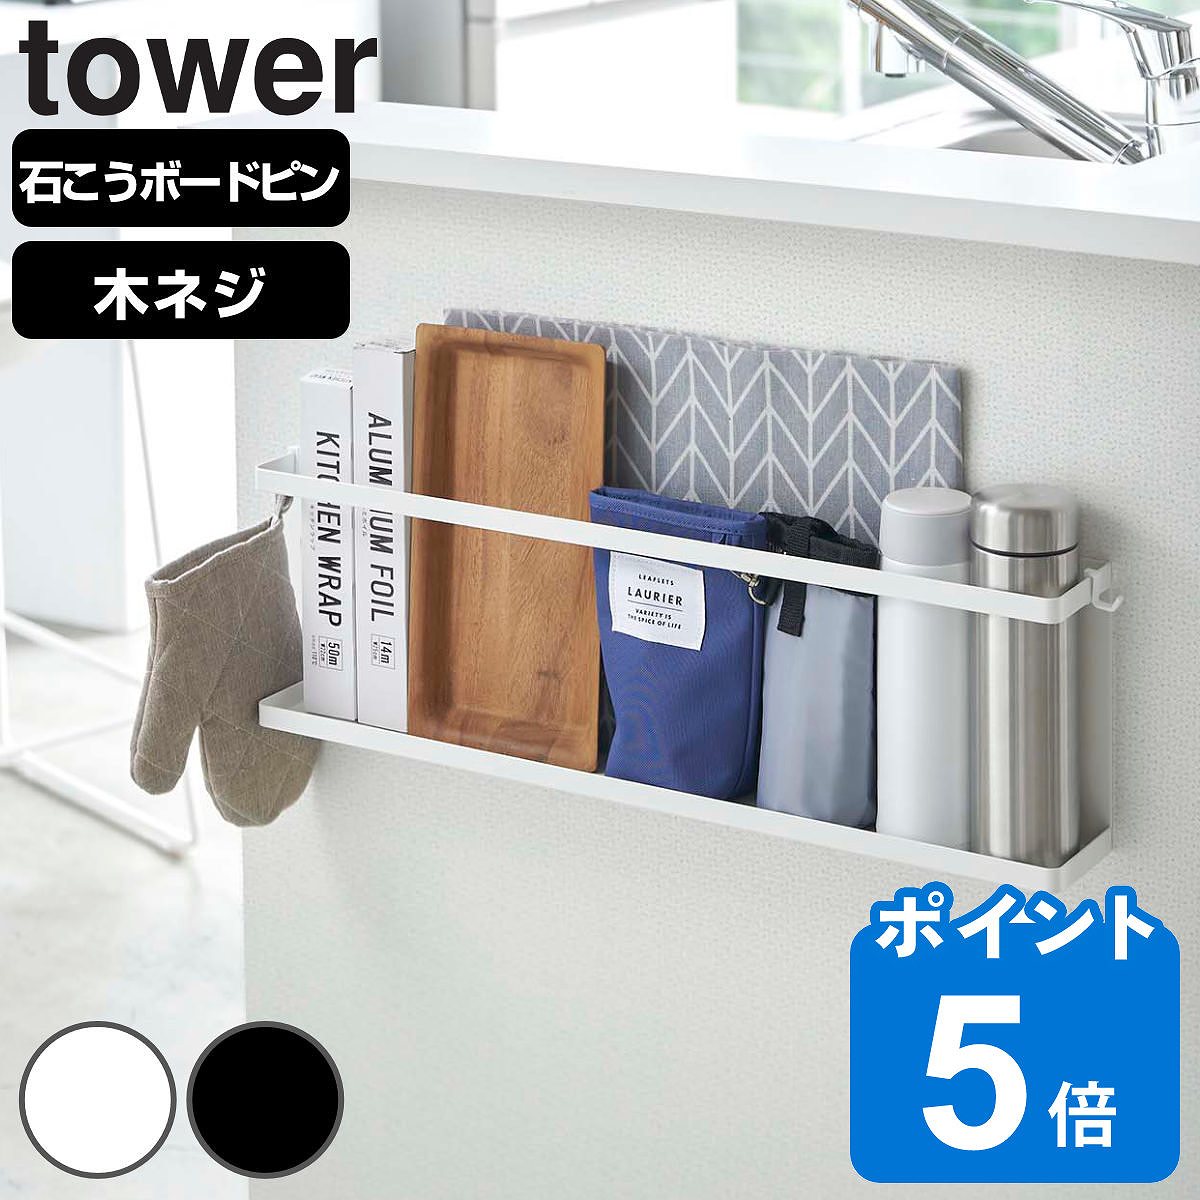 dショッピング |山崎実業 tower キッチンカウンター横収納ラック